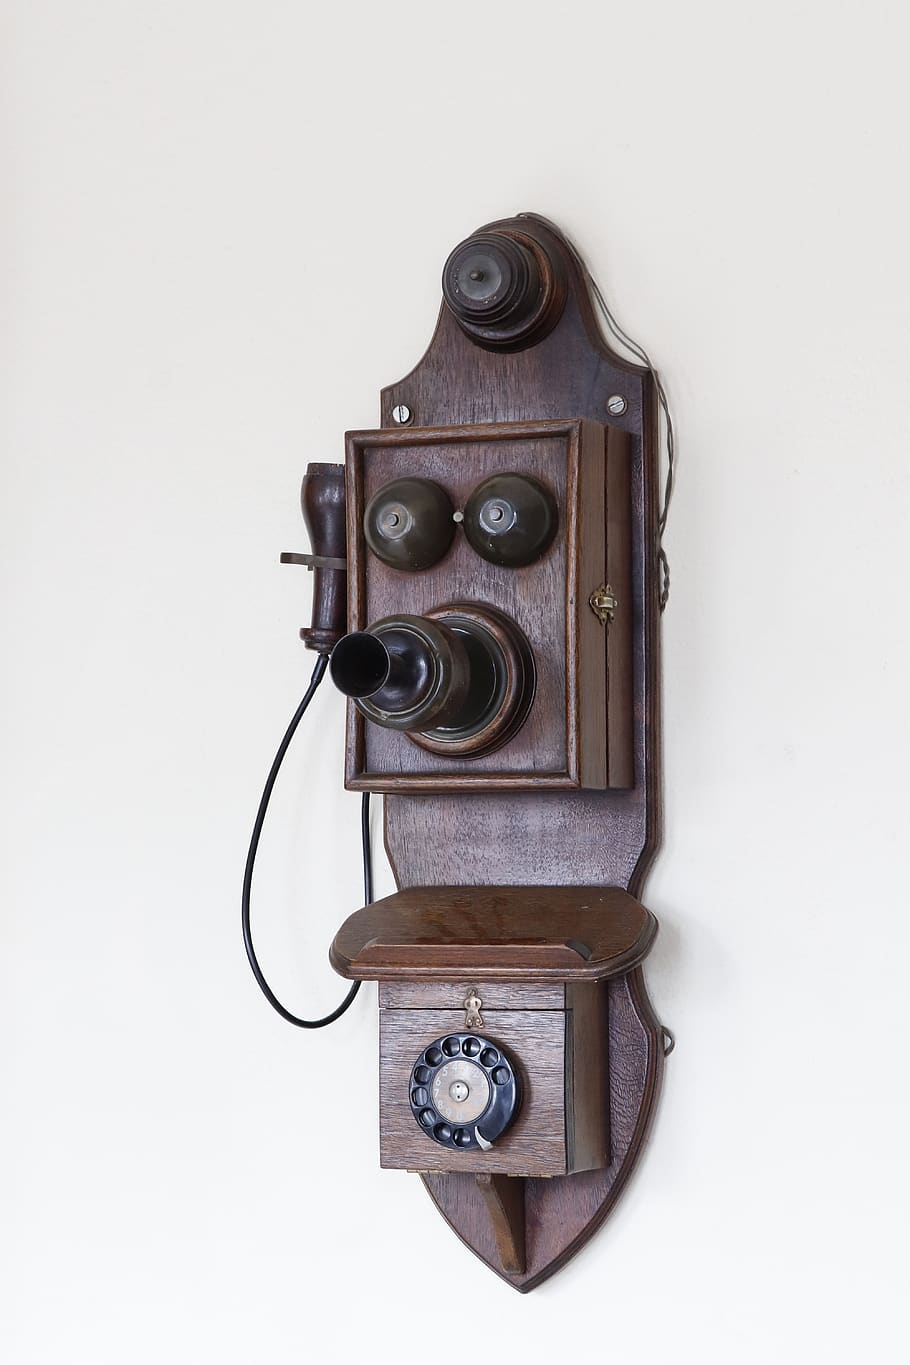 phone, old, communication, technology, vintage, nostalgia, contact, retro, call, antiquidade